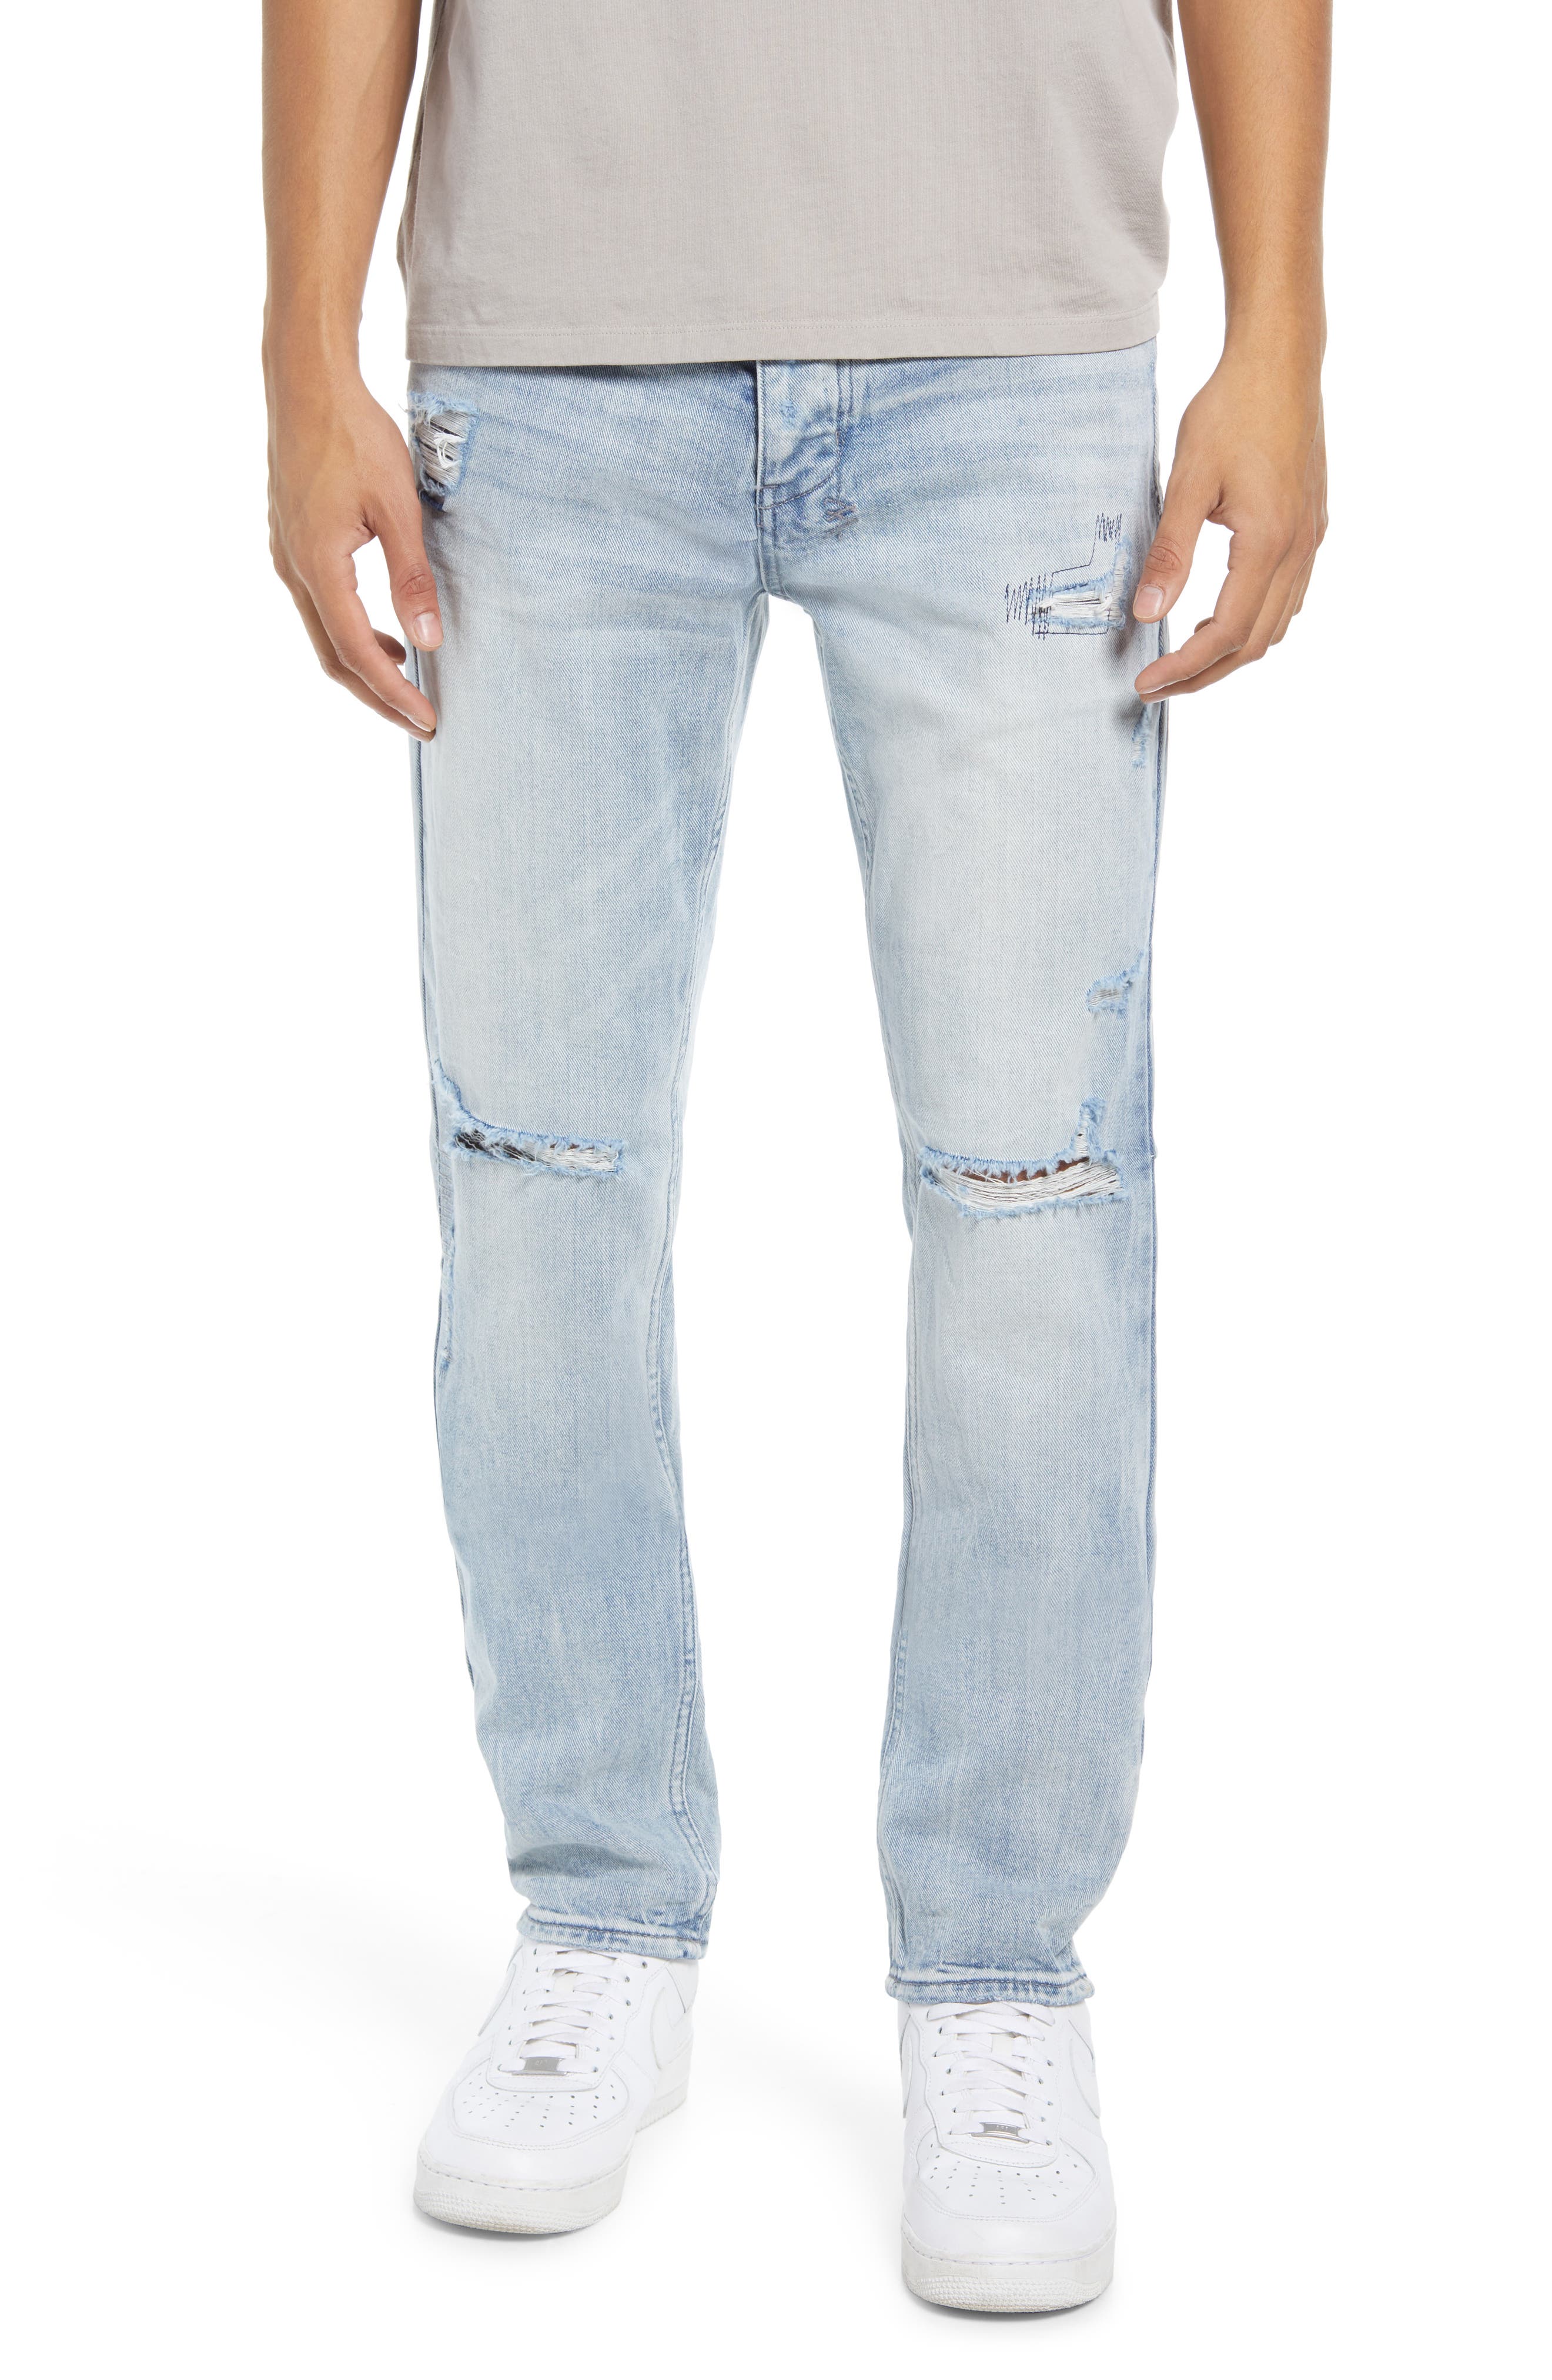 Ksubi Chitch Layover Trashed Skinny Jeans in Denim at Nordstrom, Size 30 X 32